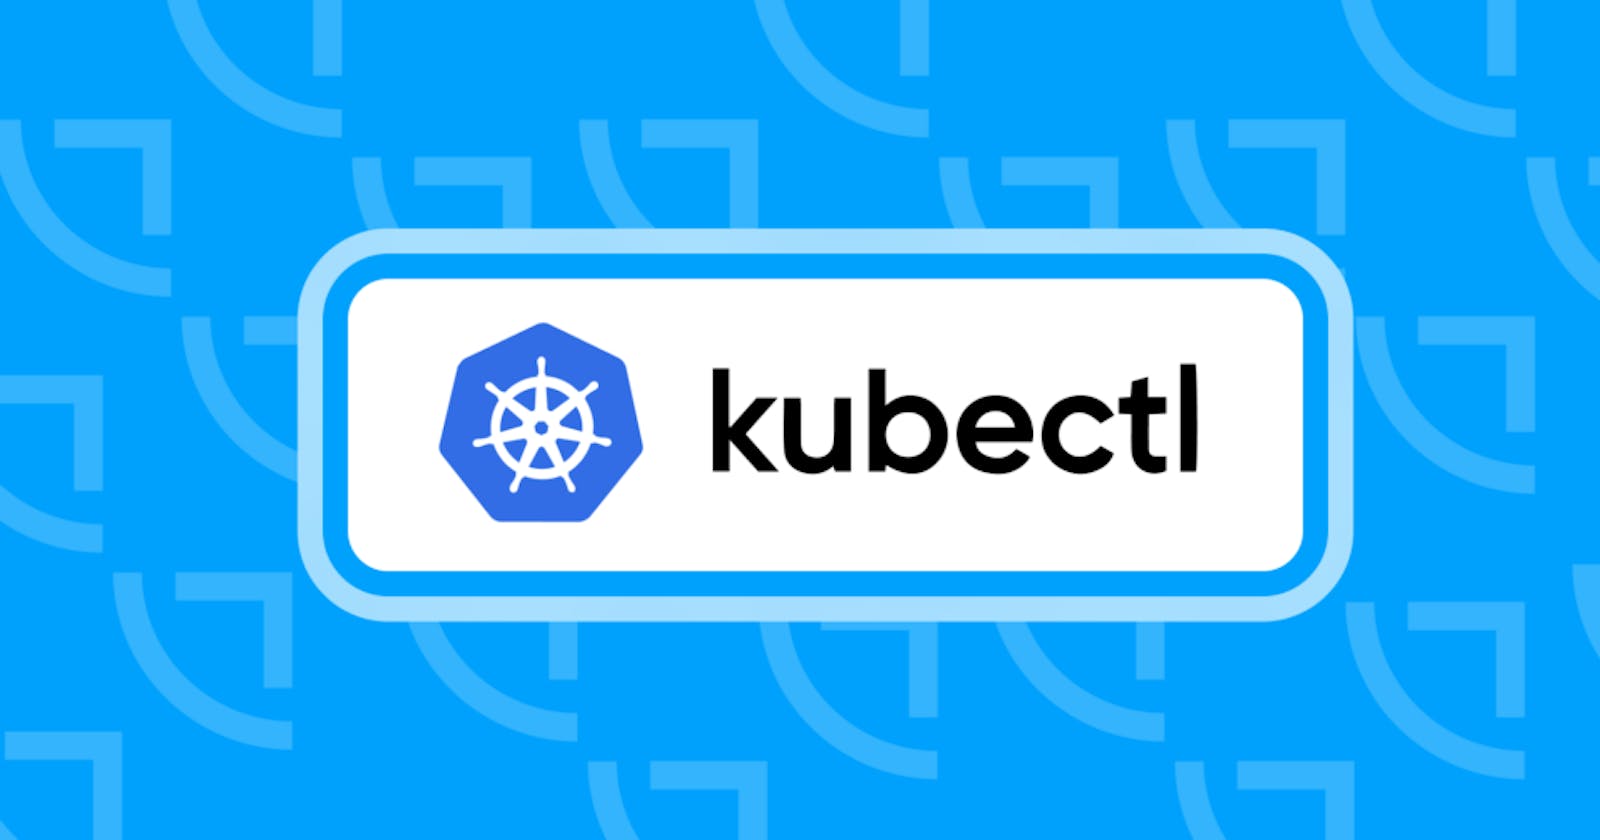 100 Kubernetes Diagnostics Commands with Kubectl